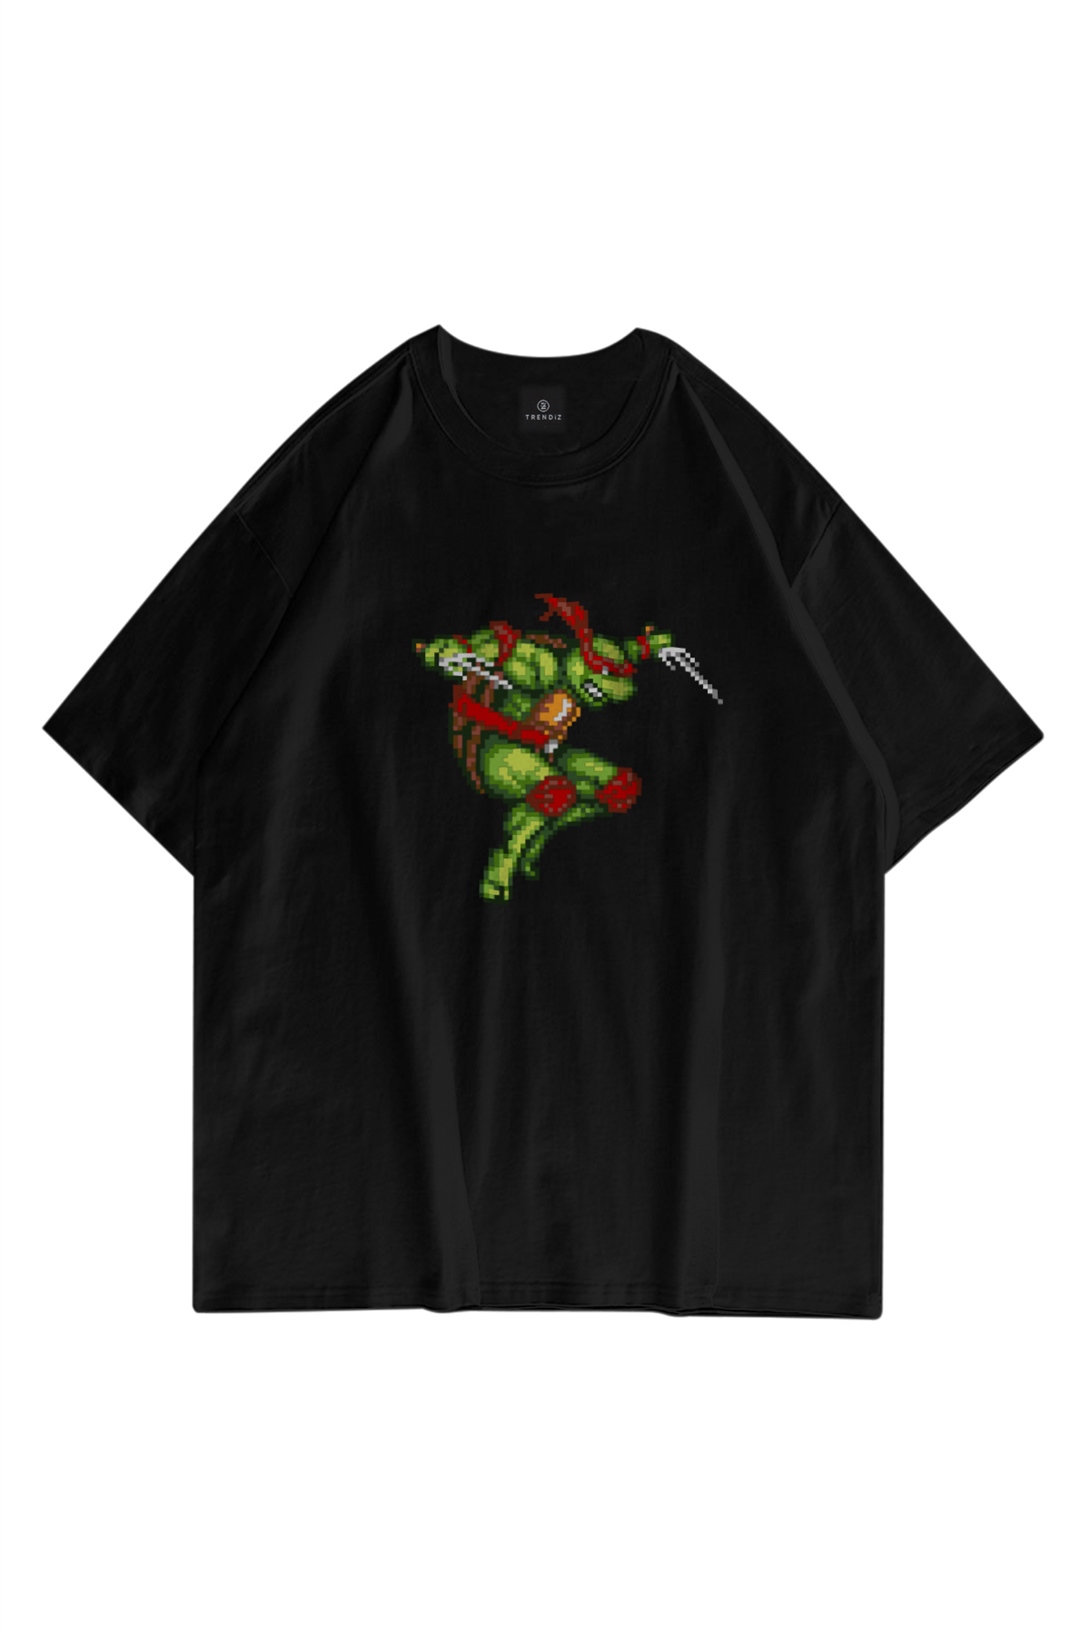 Trendiz Unisex Raphael Ninja Turtles Siyah Tshirt